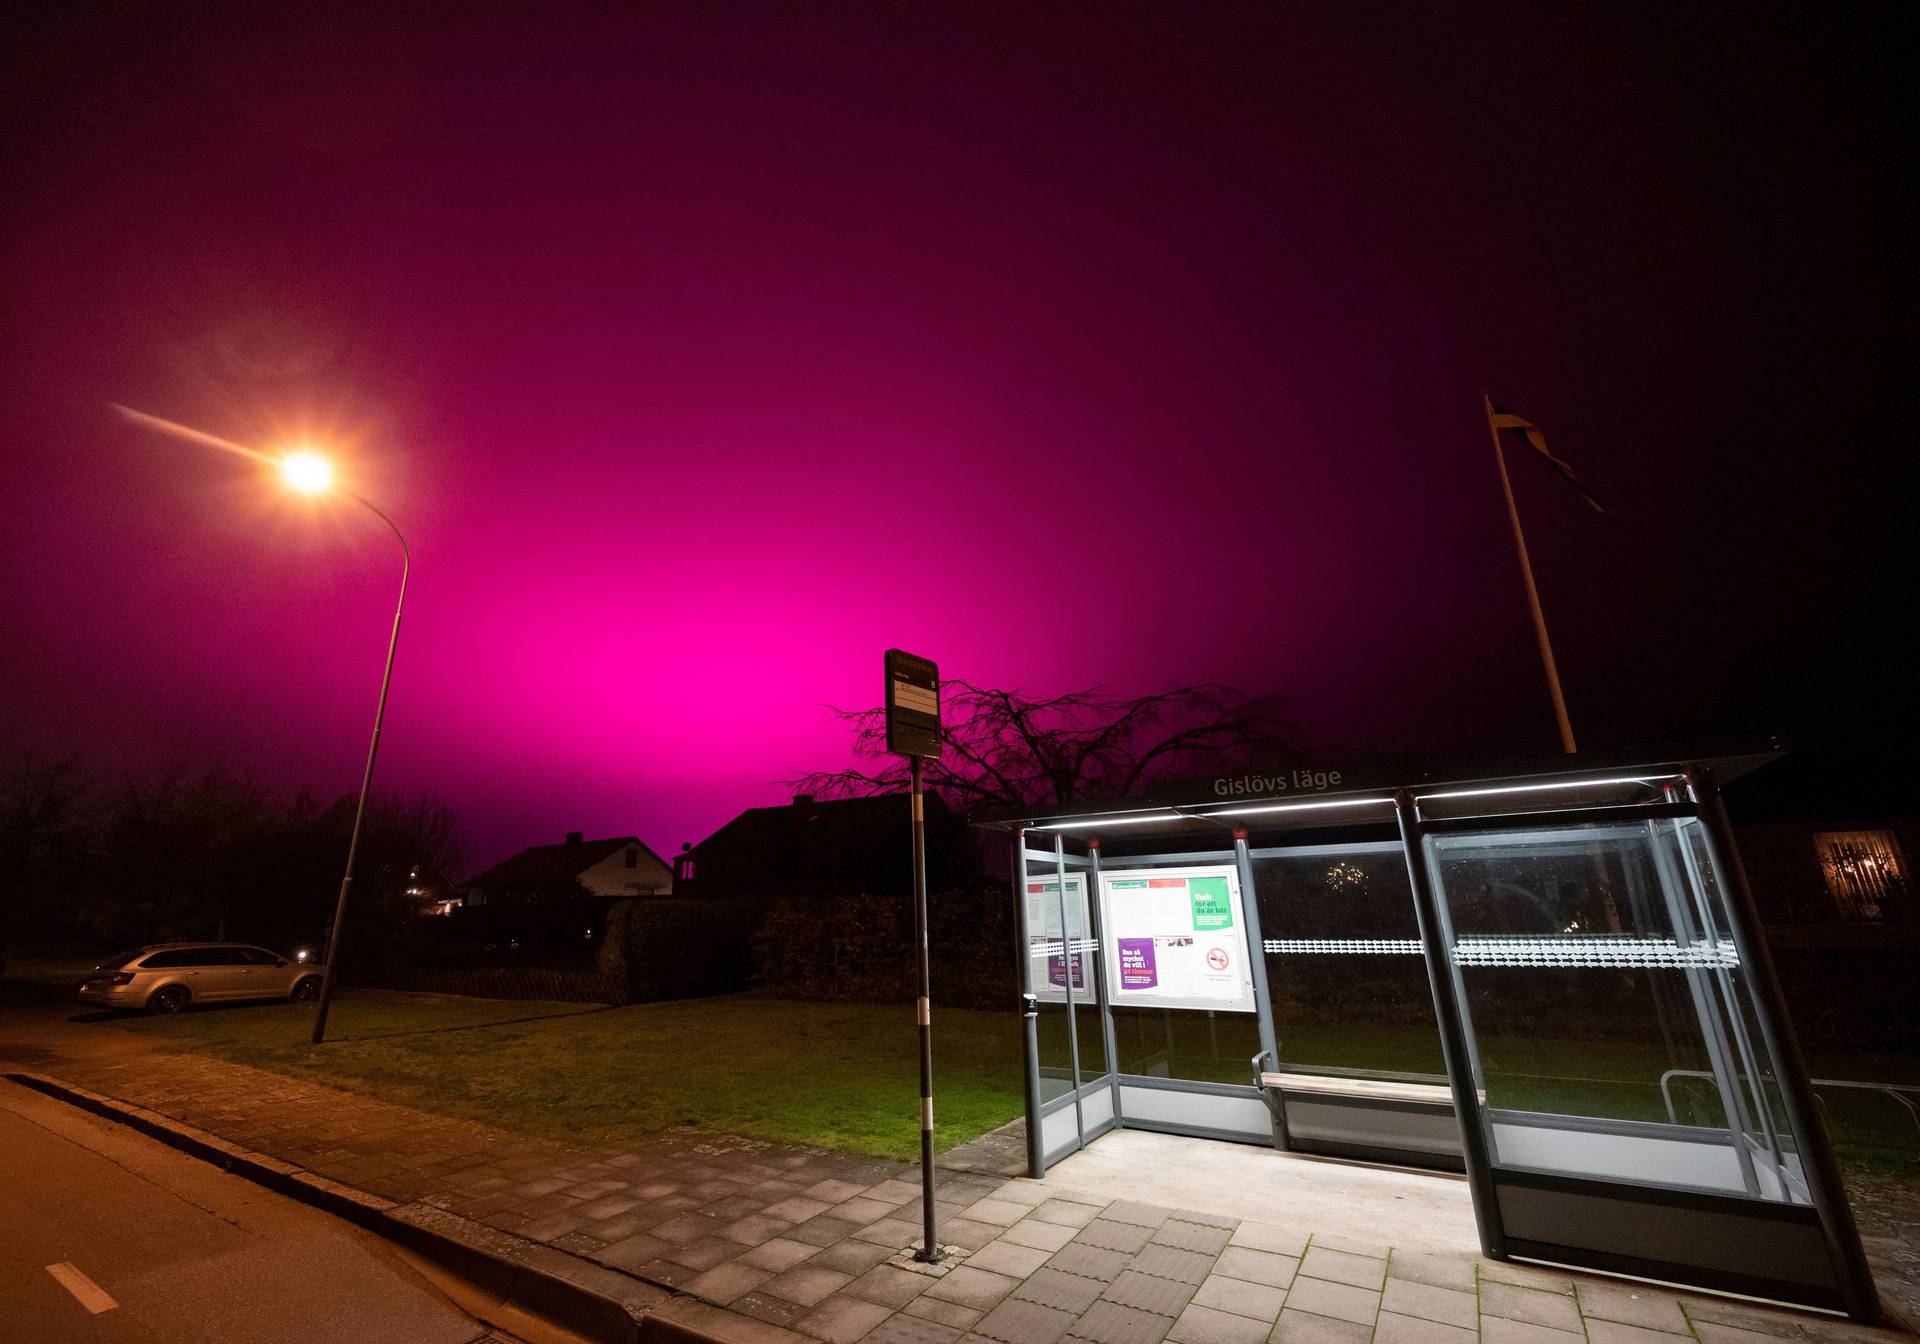 New greenhouse lighting causes the sky to turn purple, Trelleborg, Sweden - 25 Nov 2020